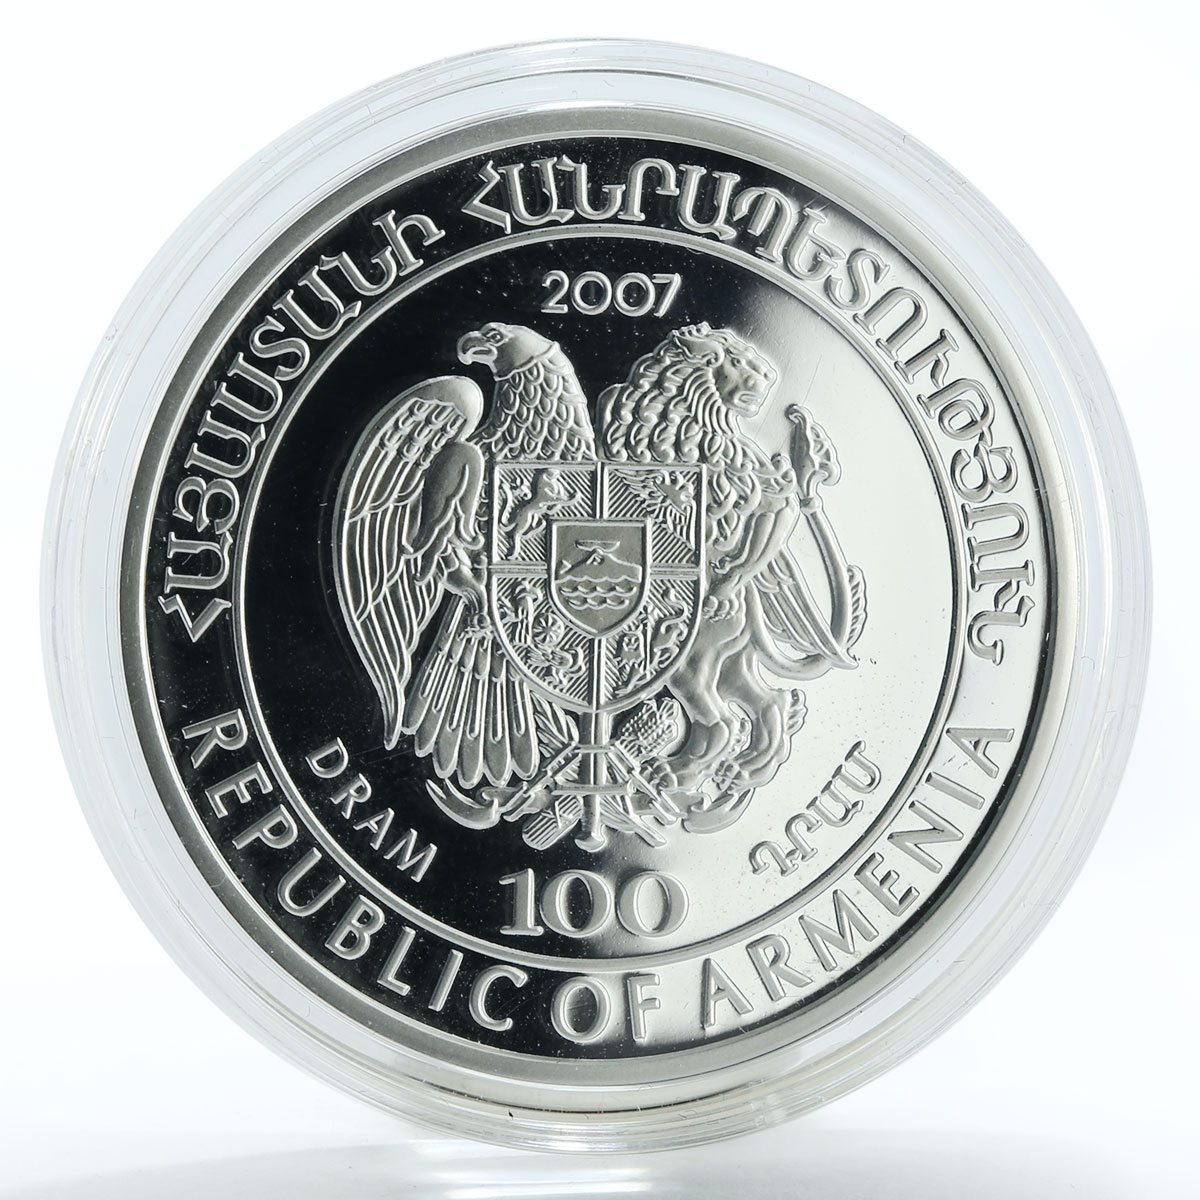 Armenia 100 dram Red Book of Armenia Anatolian leopard silver coin 2007